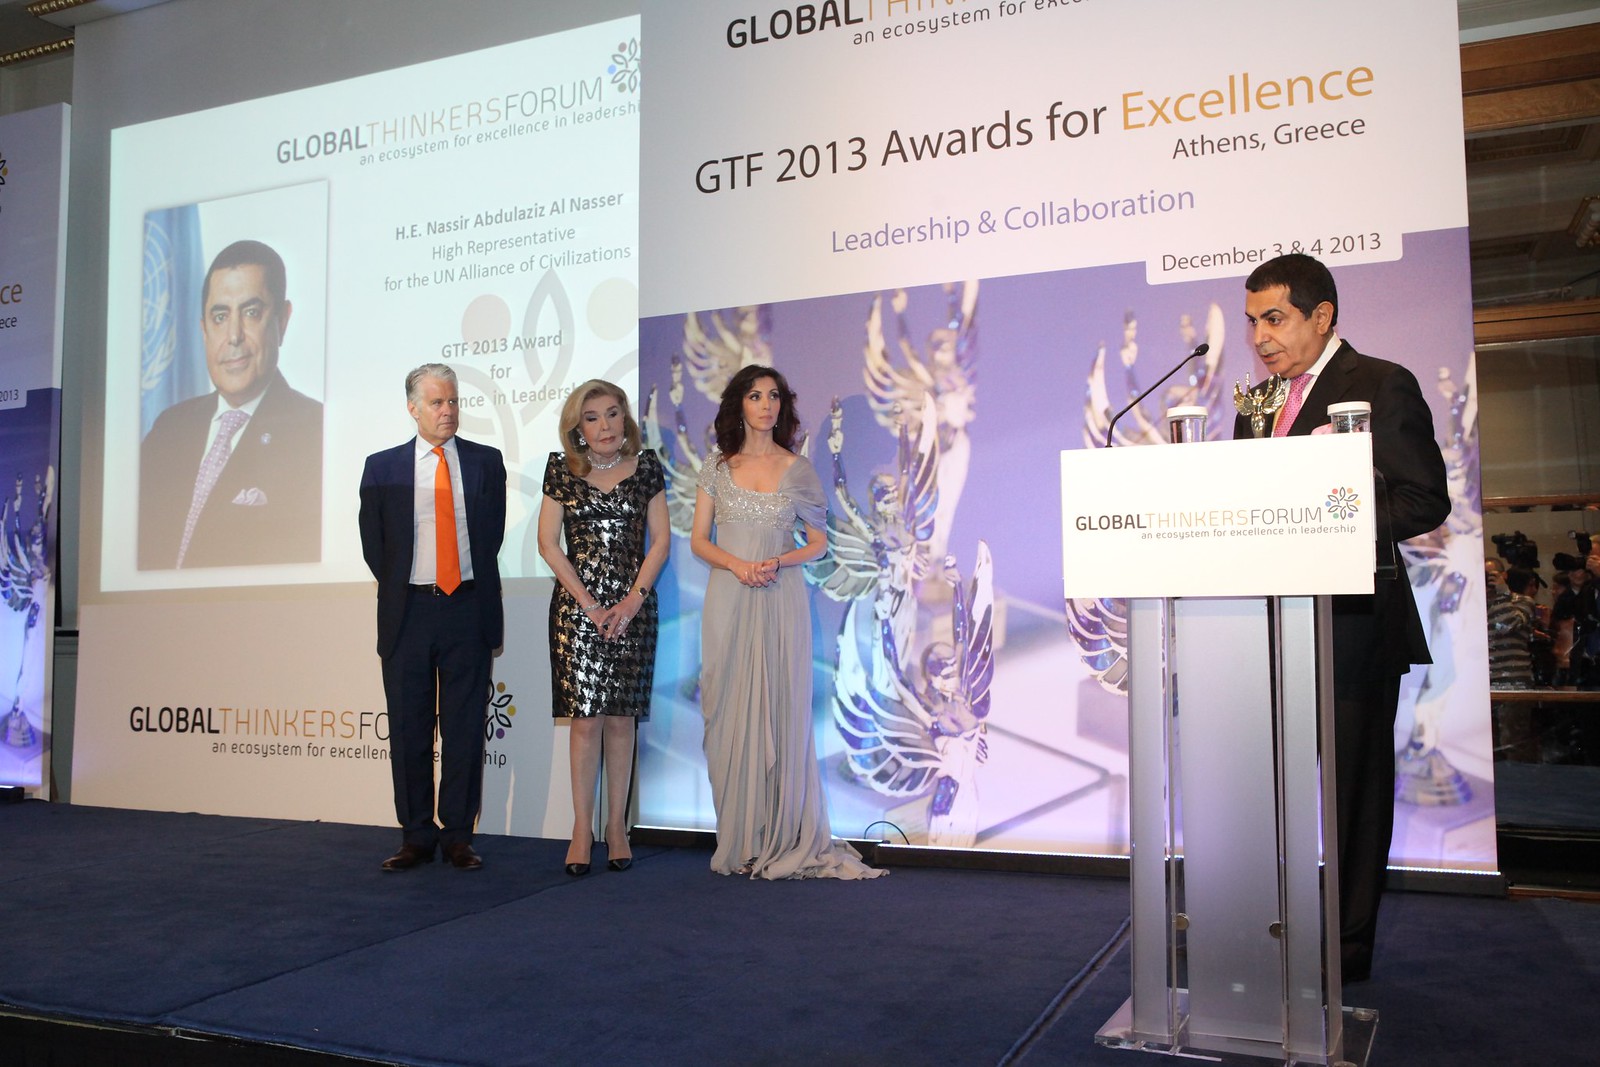 GTF 2013 Awards for Excellence, Grand Bretagne Hotel Athens, Greece- December 3 2013